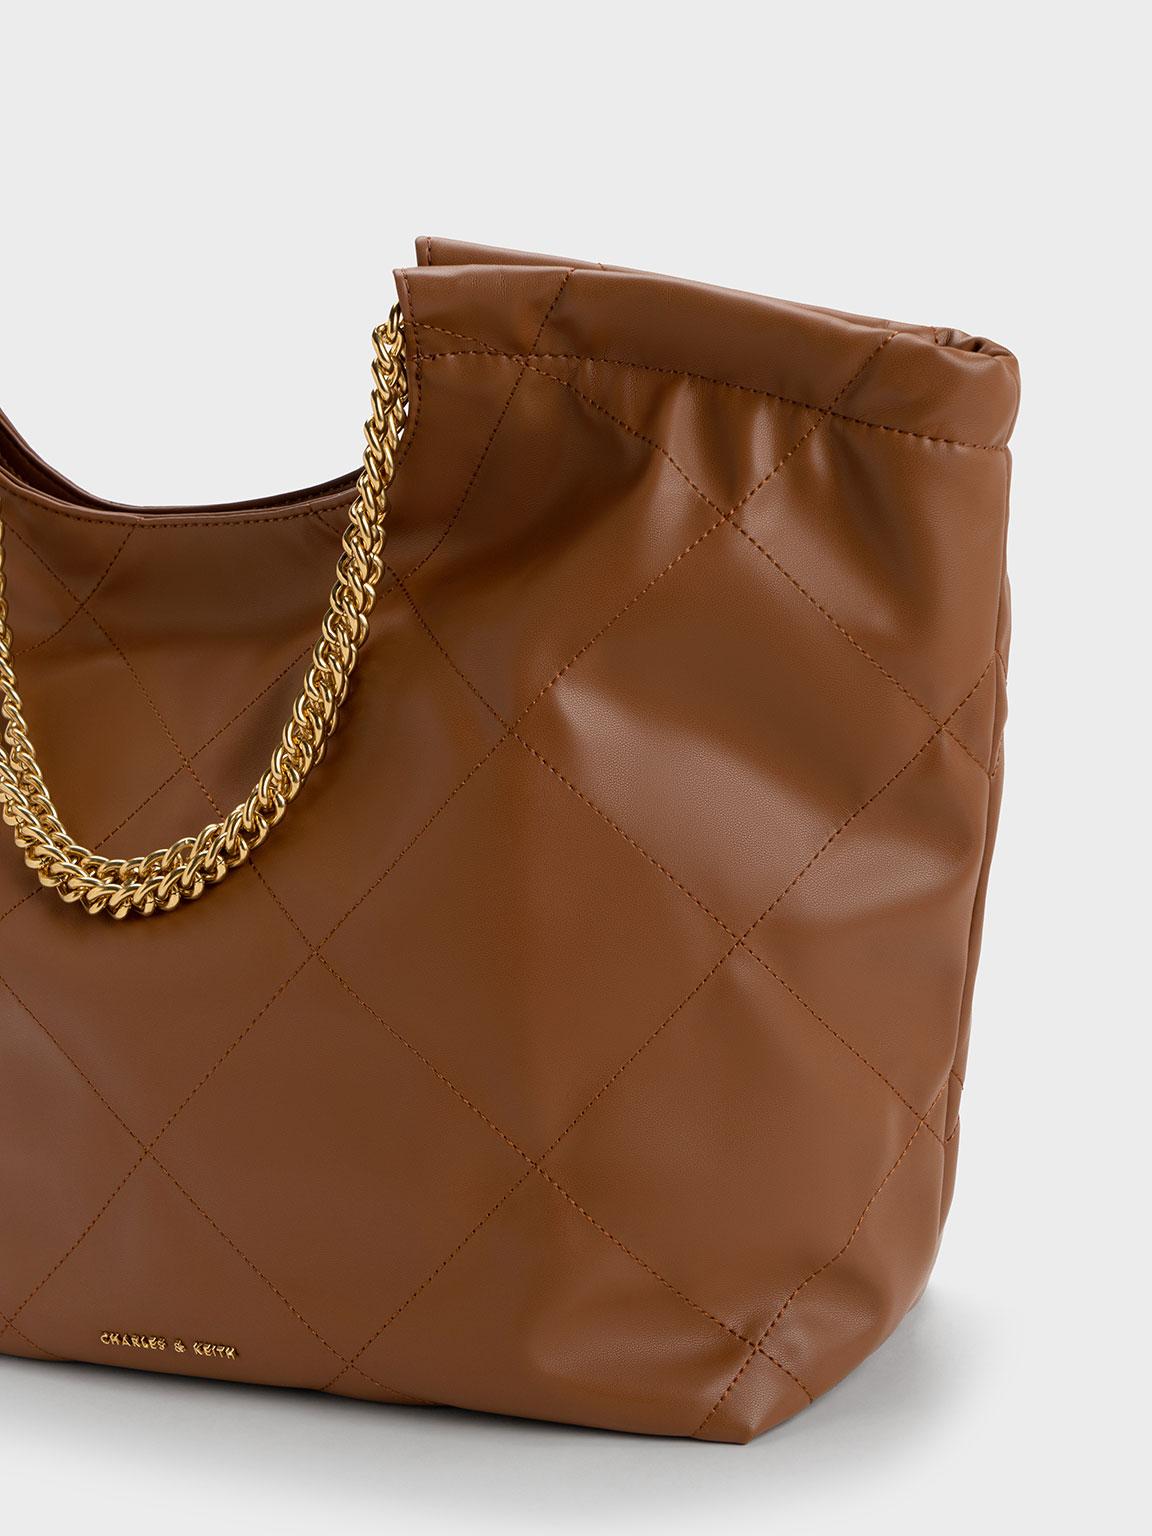 Chocolate Chain Handle Shoulder Bag - CHARLES & KEITH US